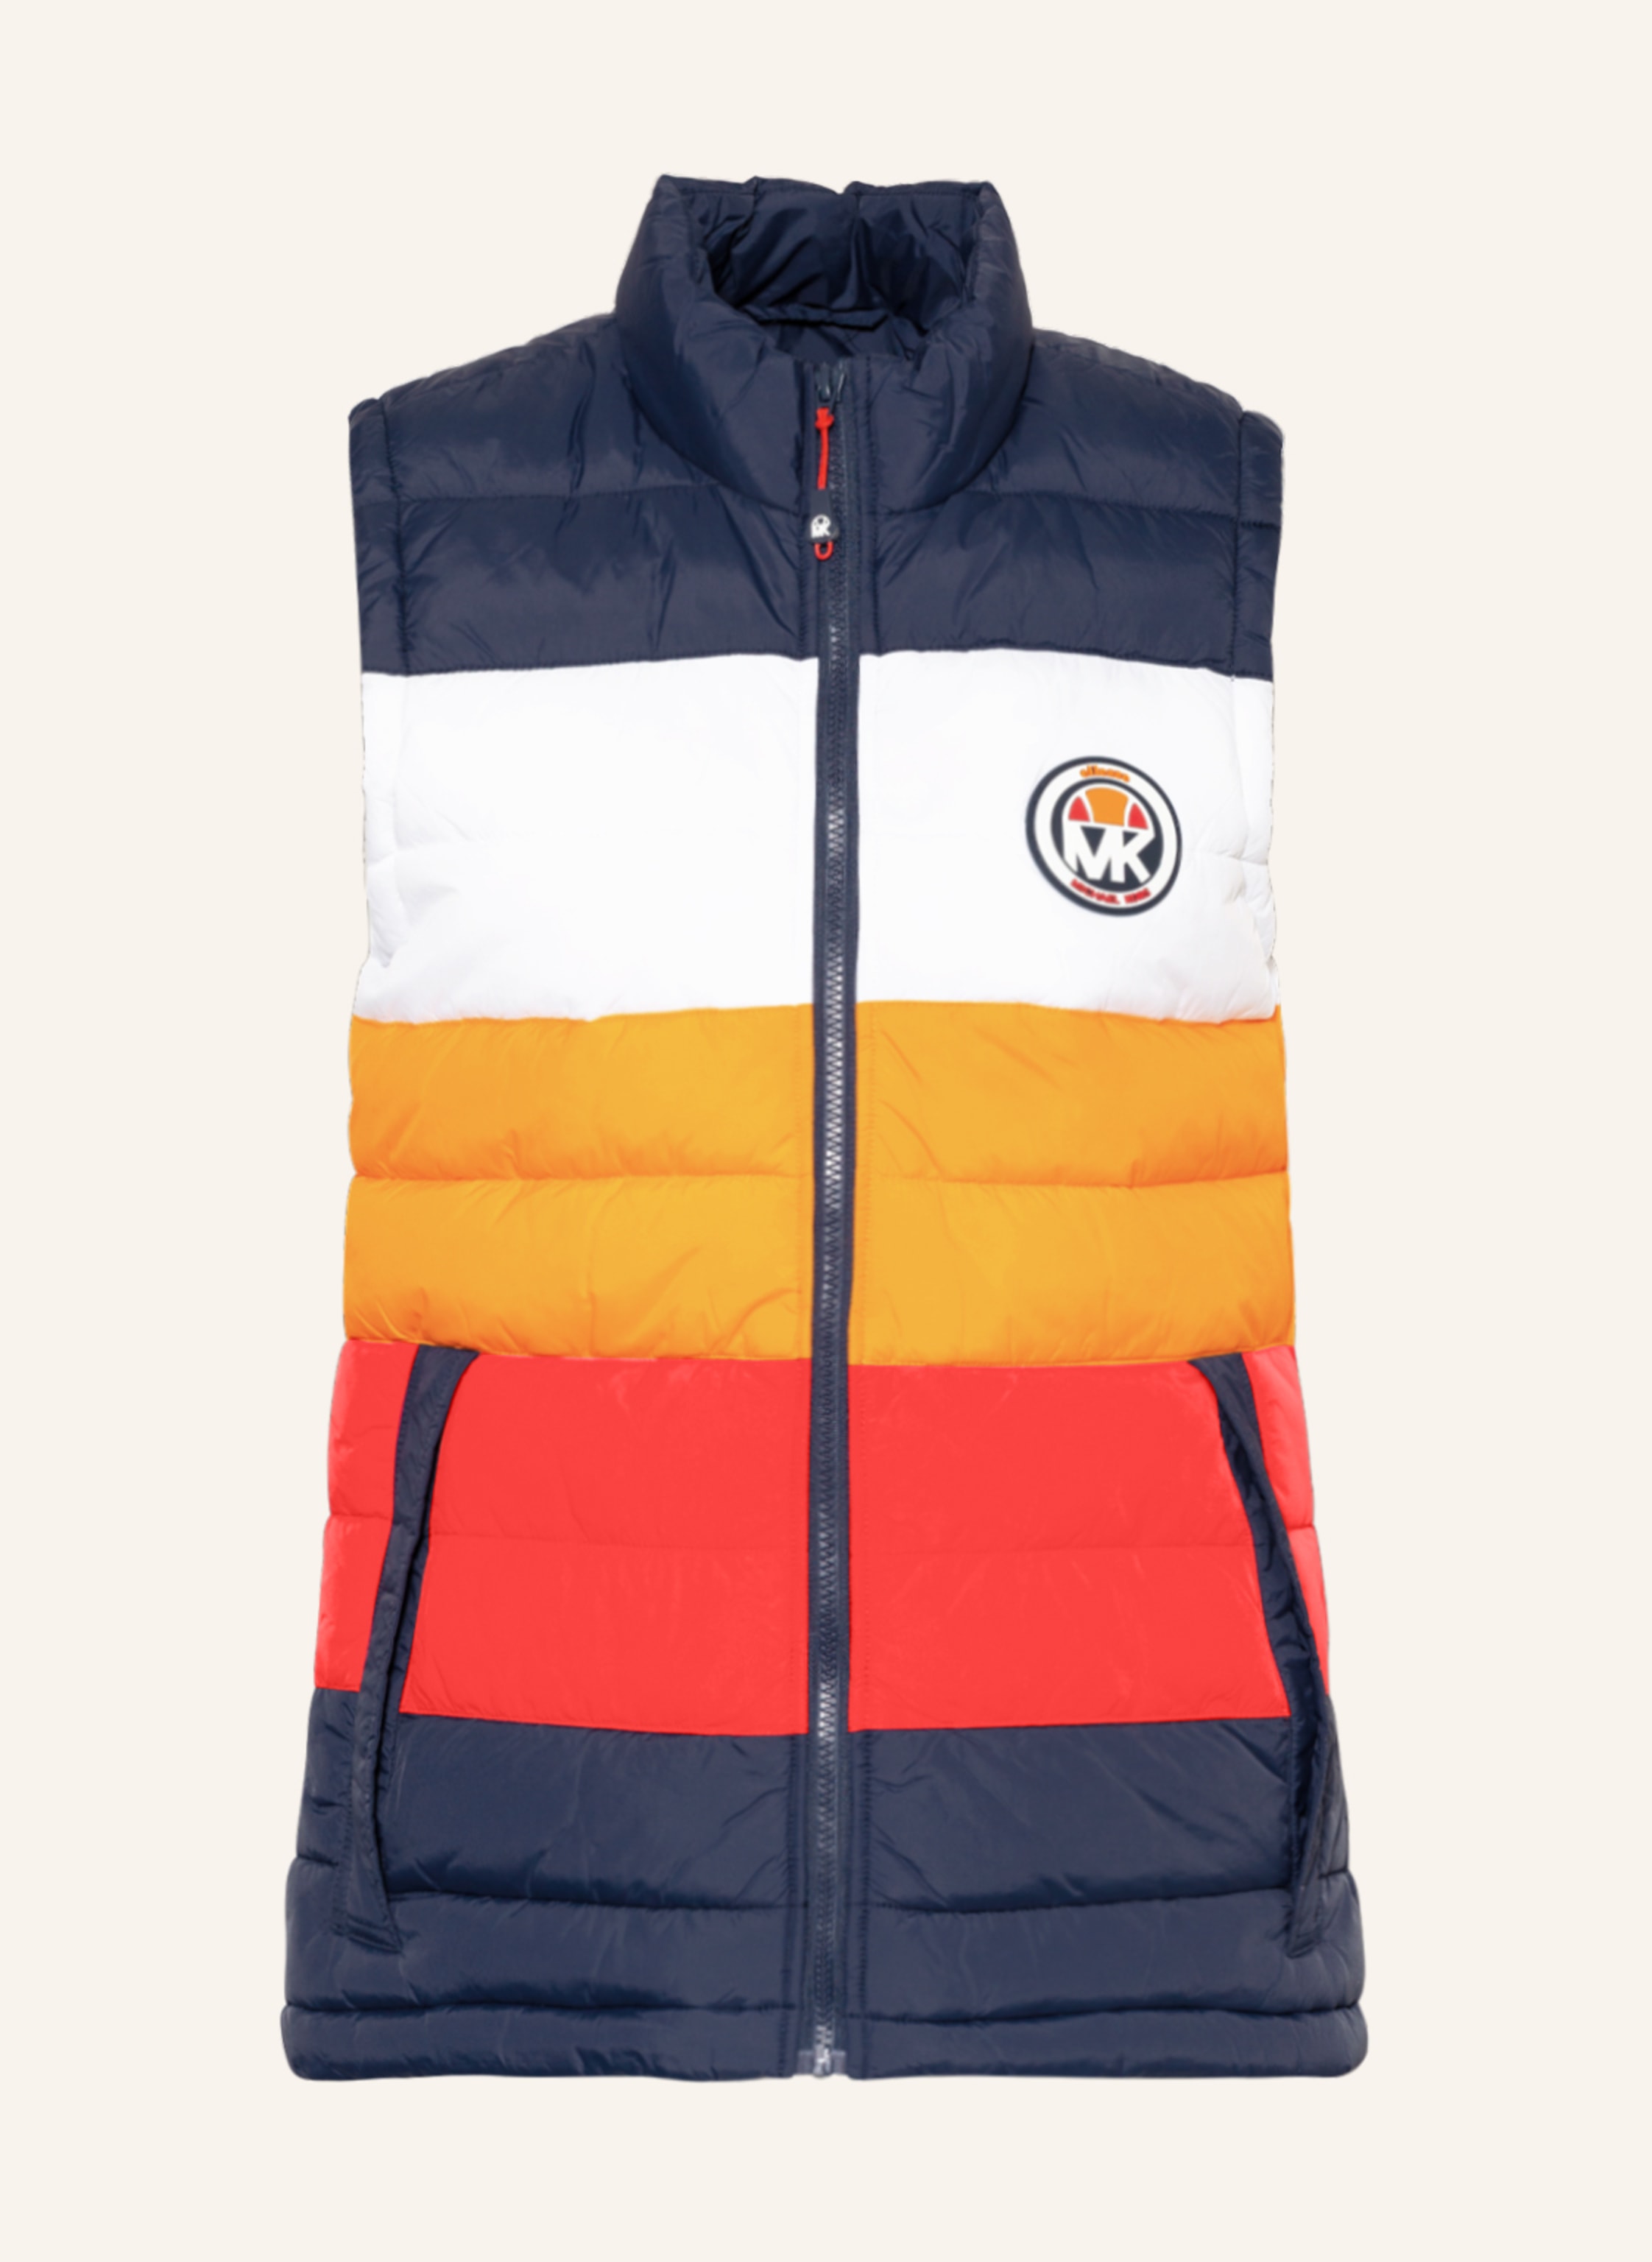 MICHAEL KORS Quilted vest VAIL in dark blue/ white/ orange | Breuninger